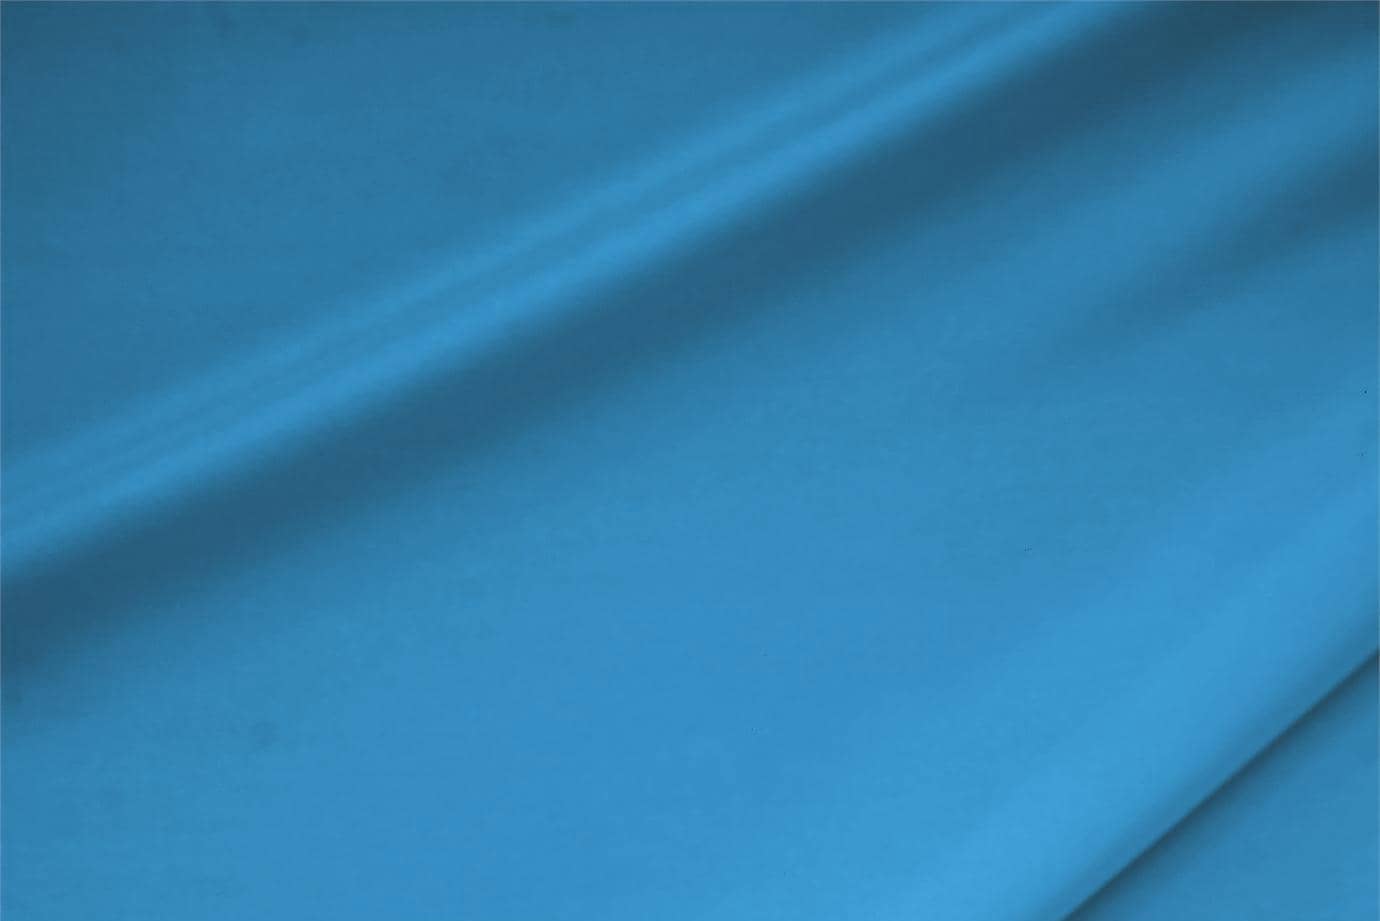 Antilles Blue Silk, Stretch Crêpe de Chine Stretch fabric for dressmaking